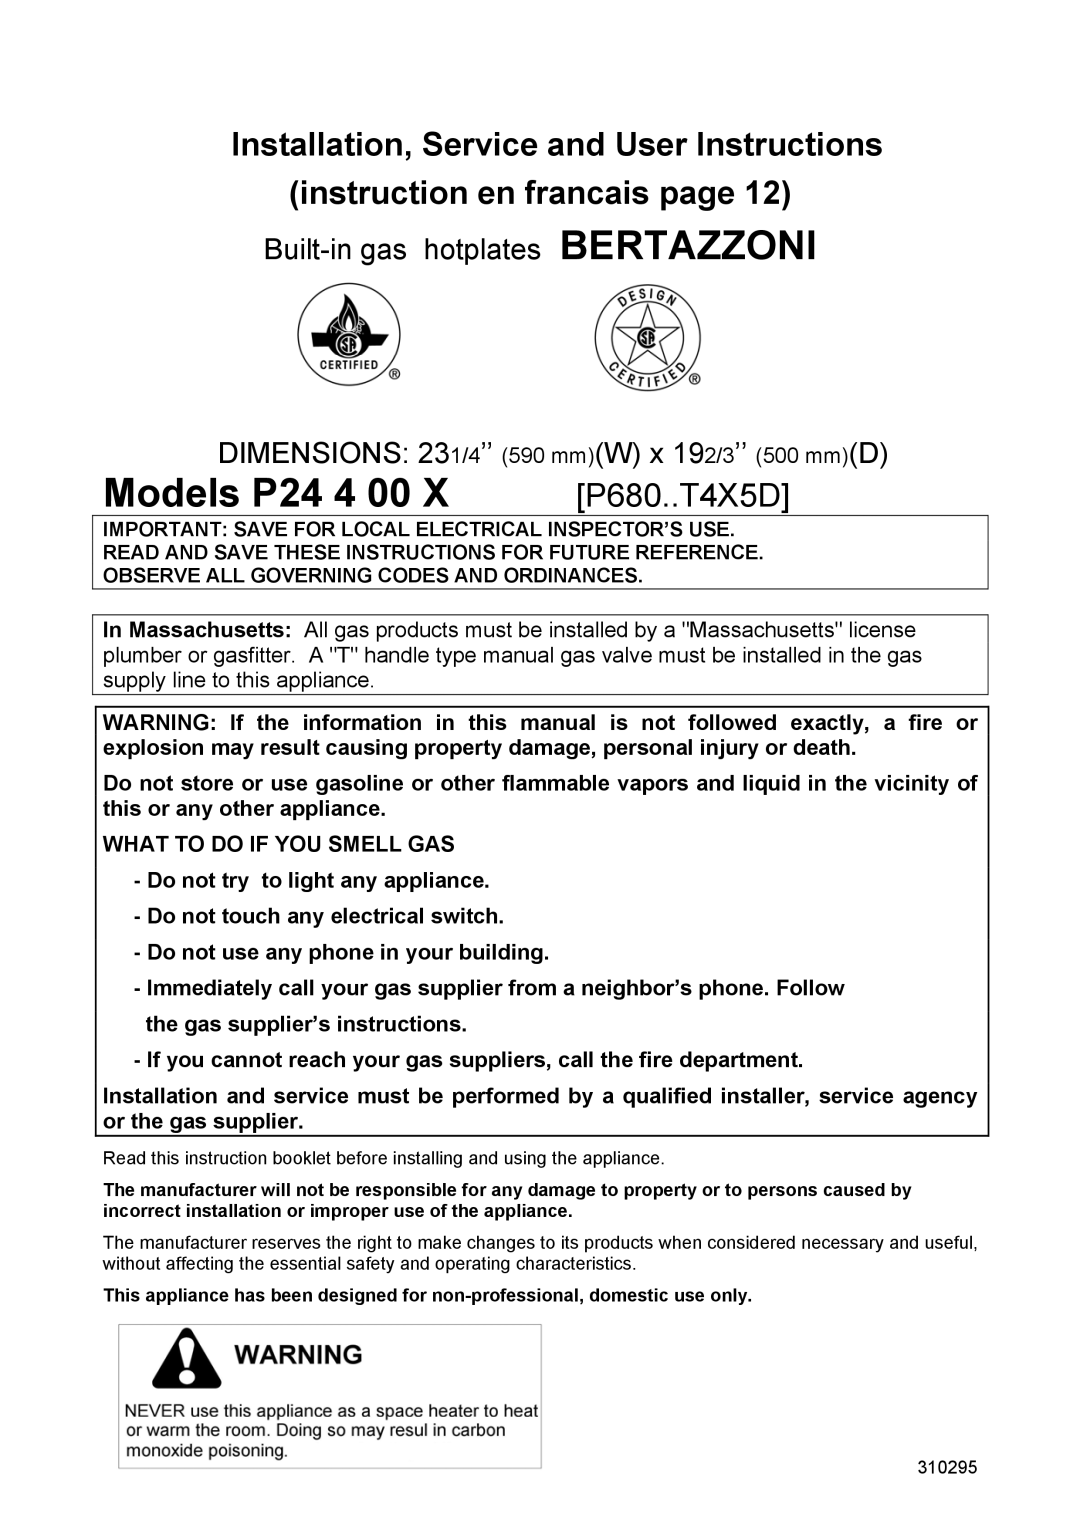 Bertazzoni P24 4 00 X manual Models P24 4 00 